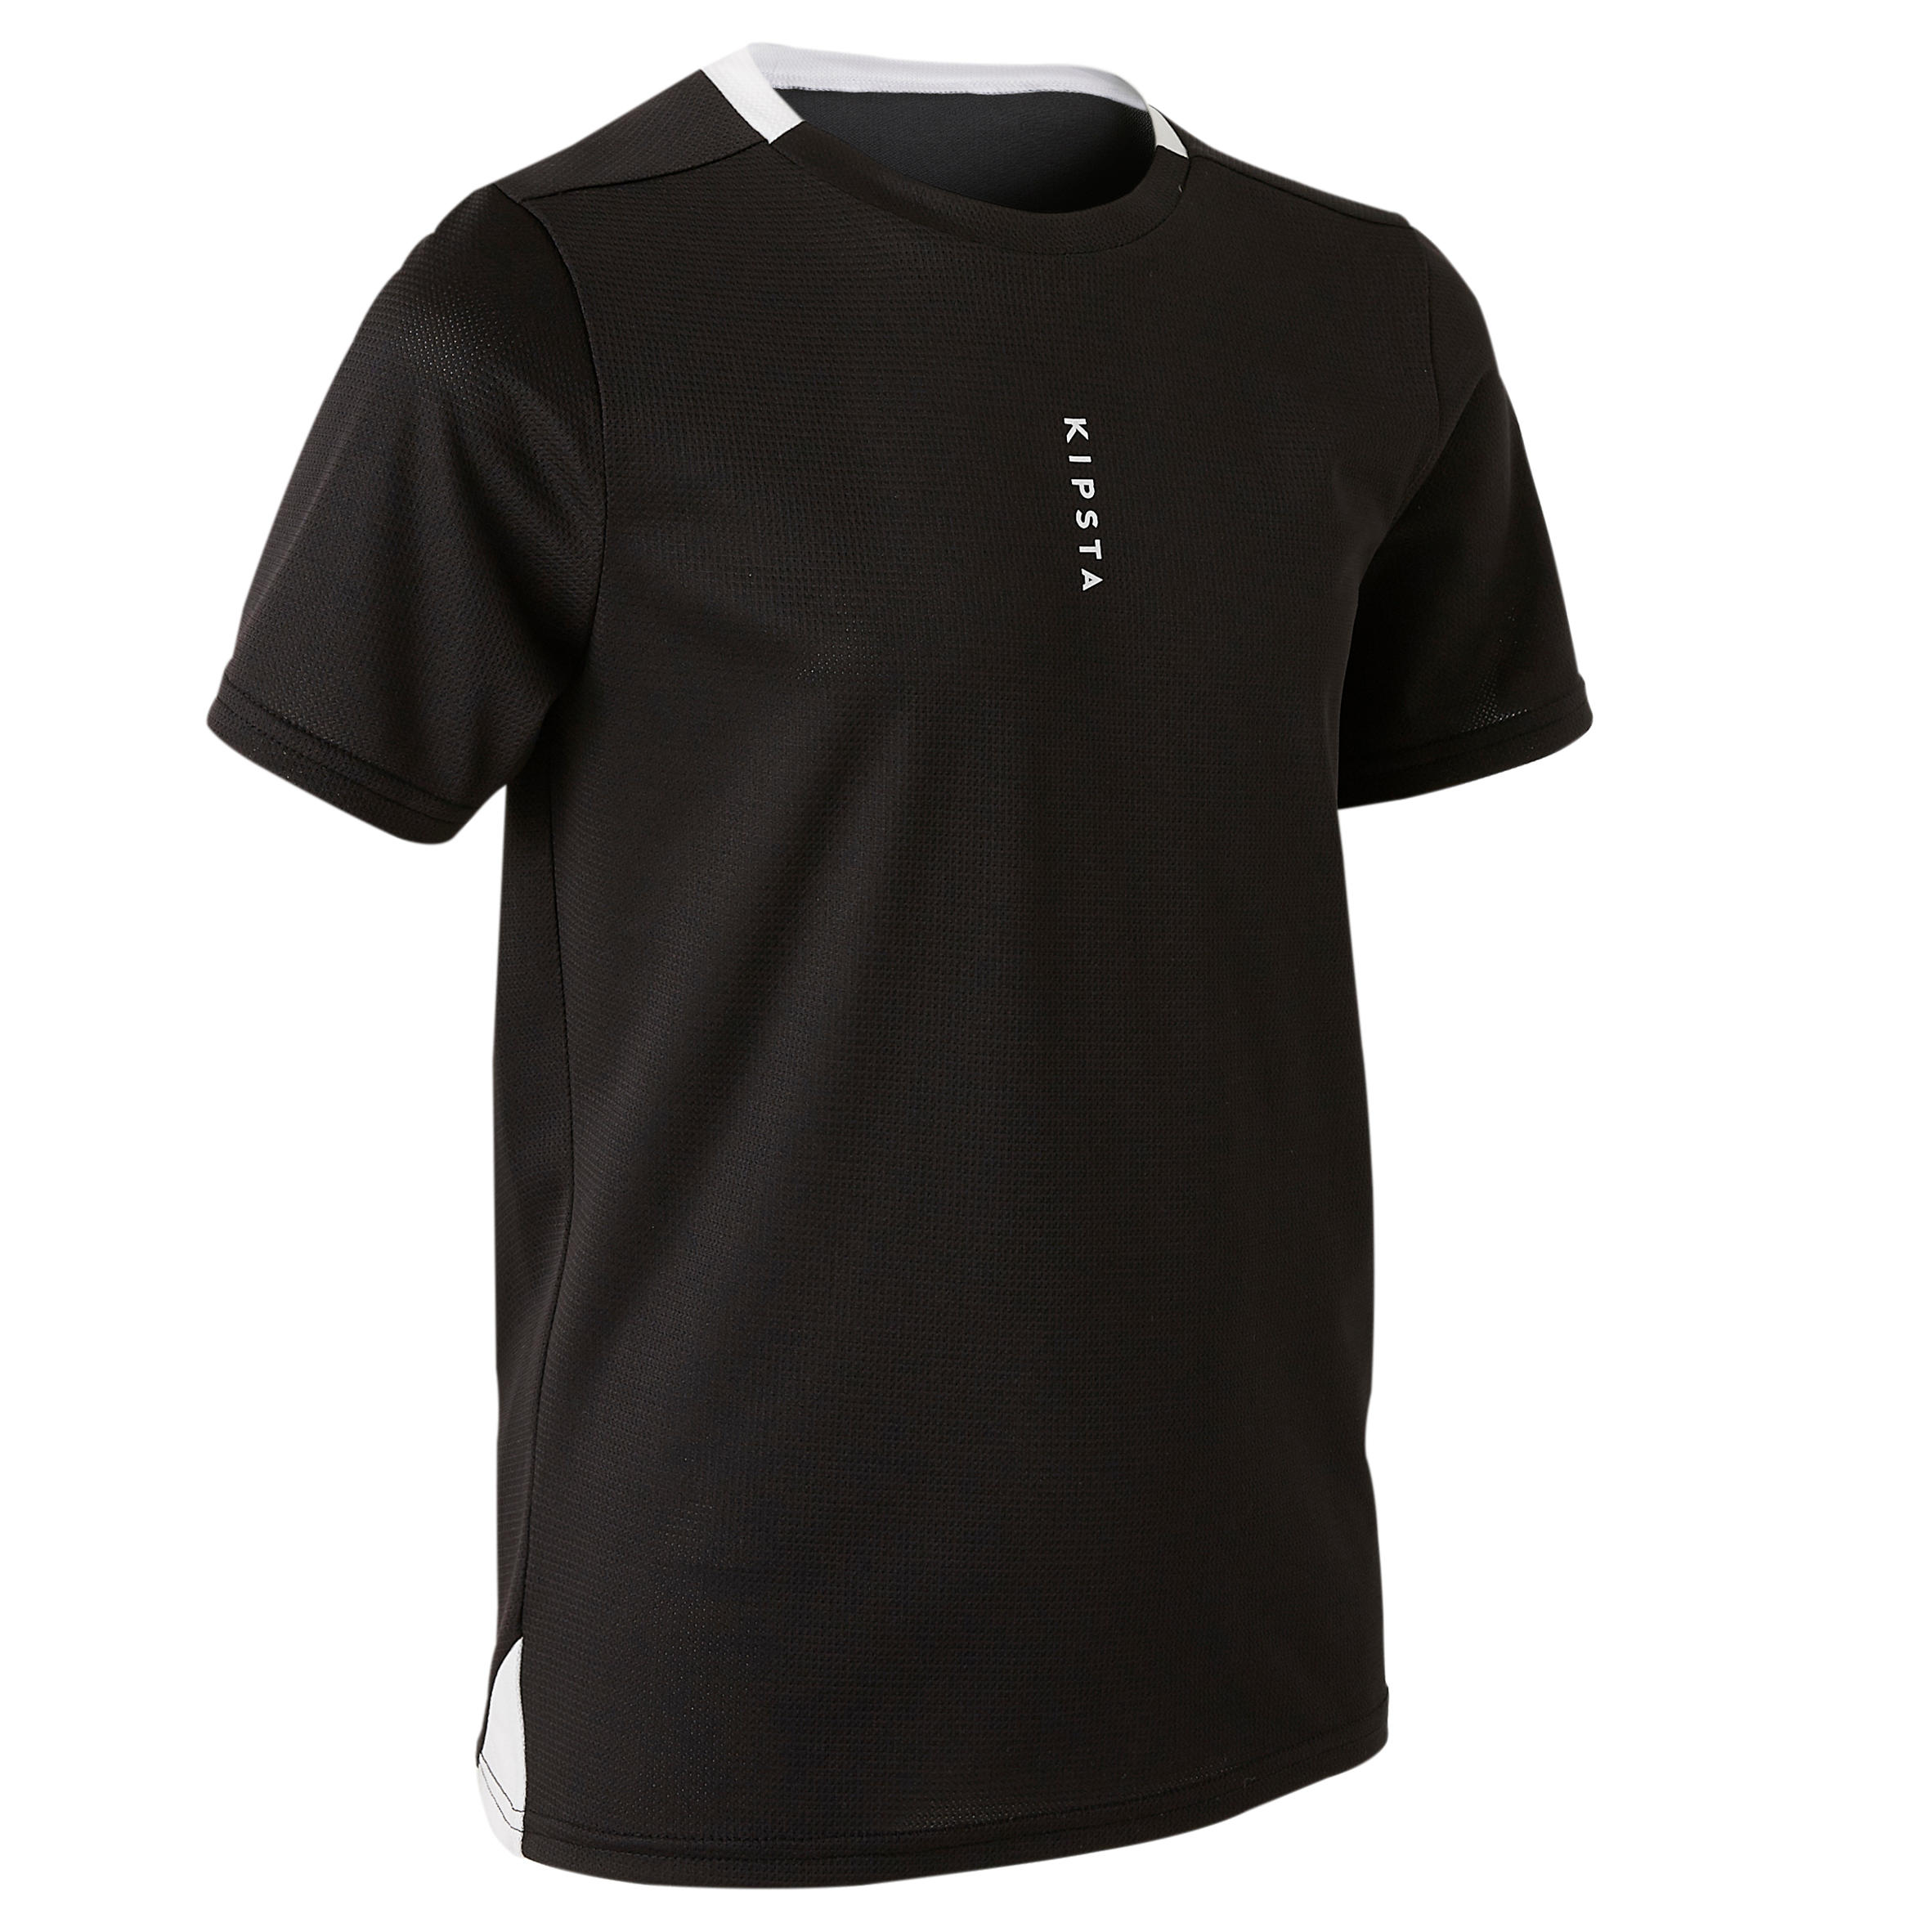 Kids' Football Shirt Essential - Black